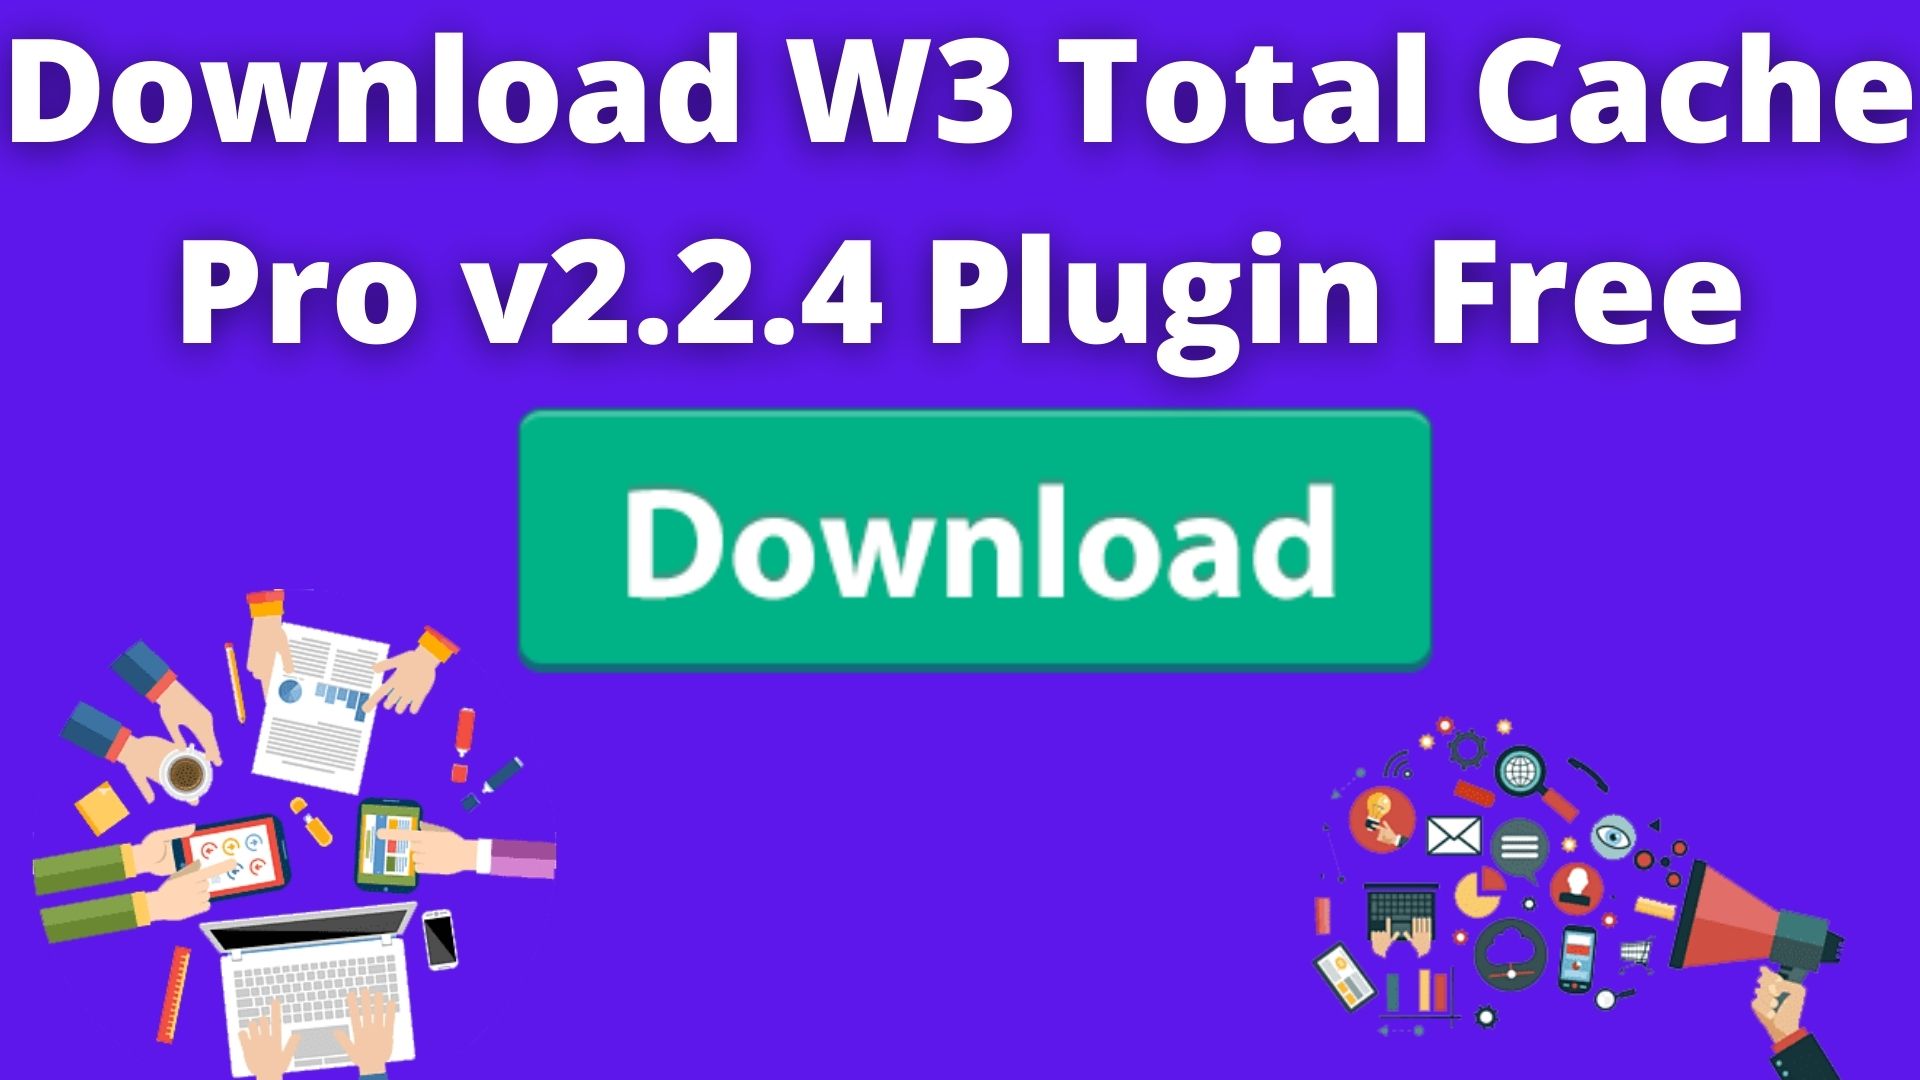 Download W3 Total Cache Pro V2.2.4 Plugin Free